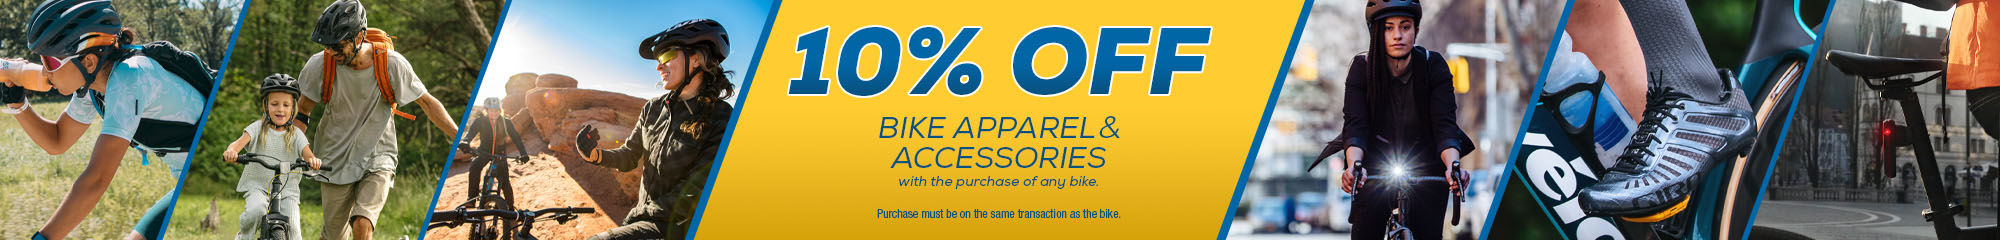 Save 10% on bike accessories when you buy a bike at Sun & Ski Sports